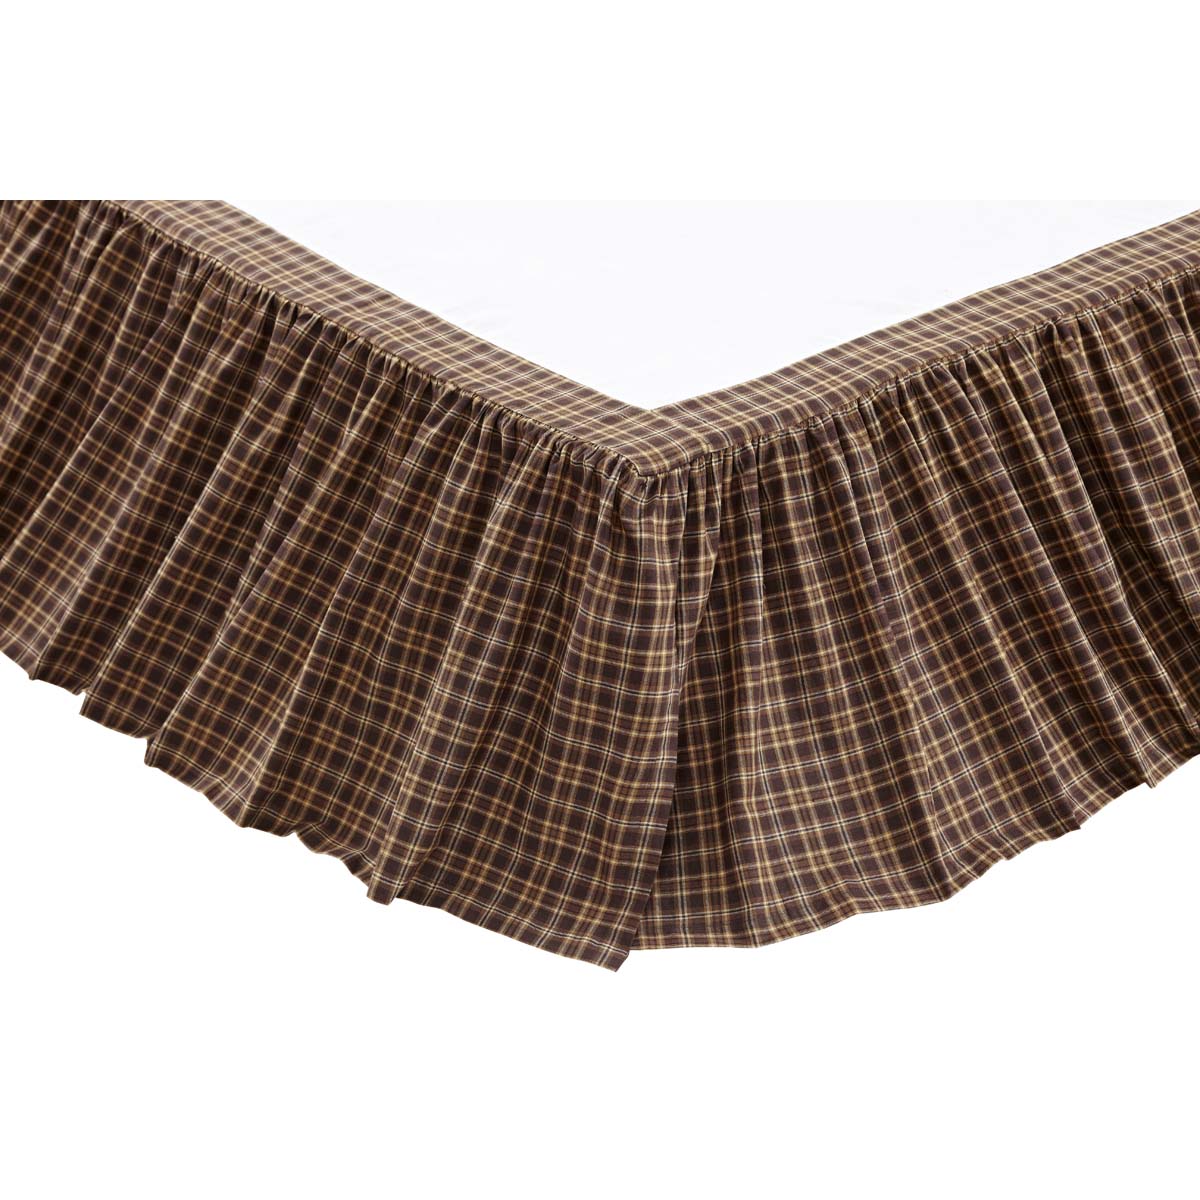 Oak & Asher Prescott King Bed Skirt 78x80x16 By VHC Brands